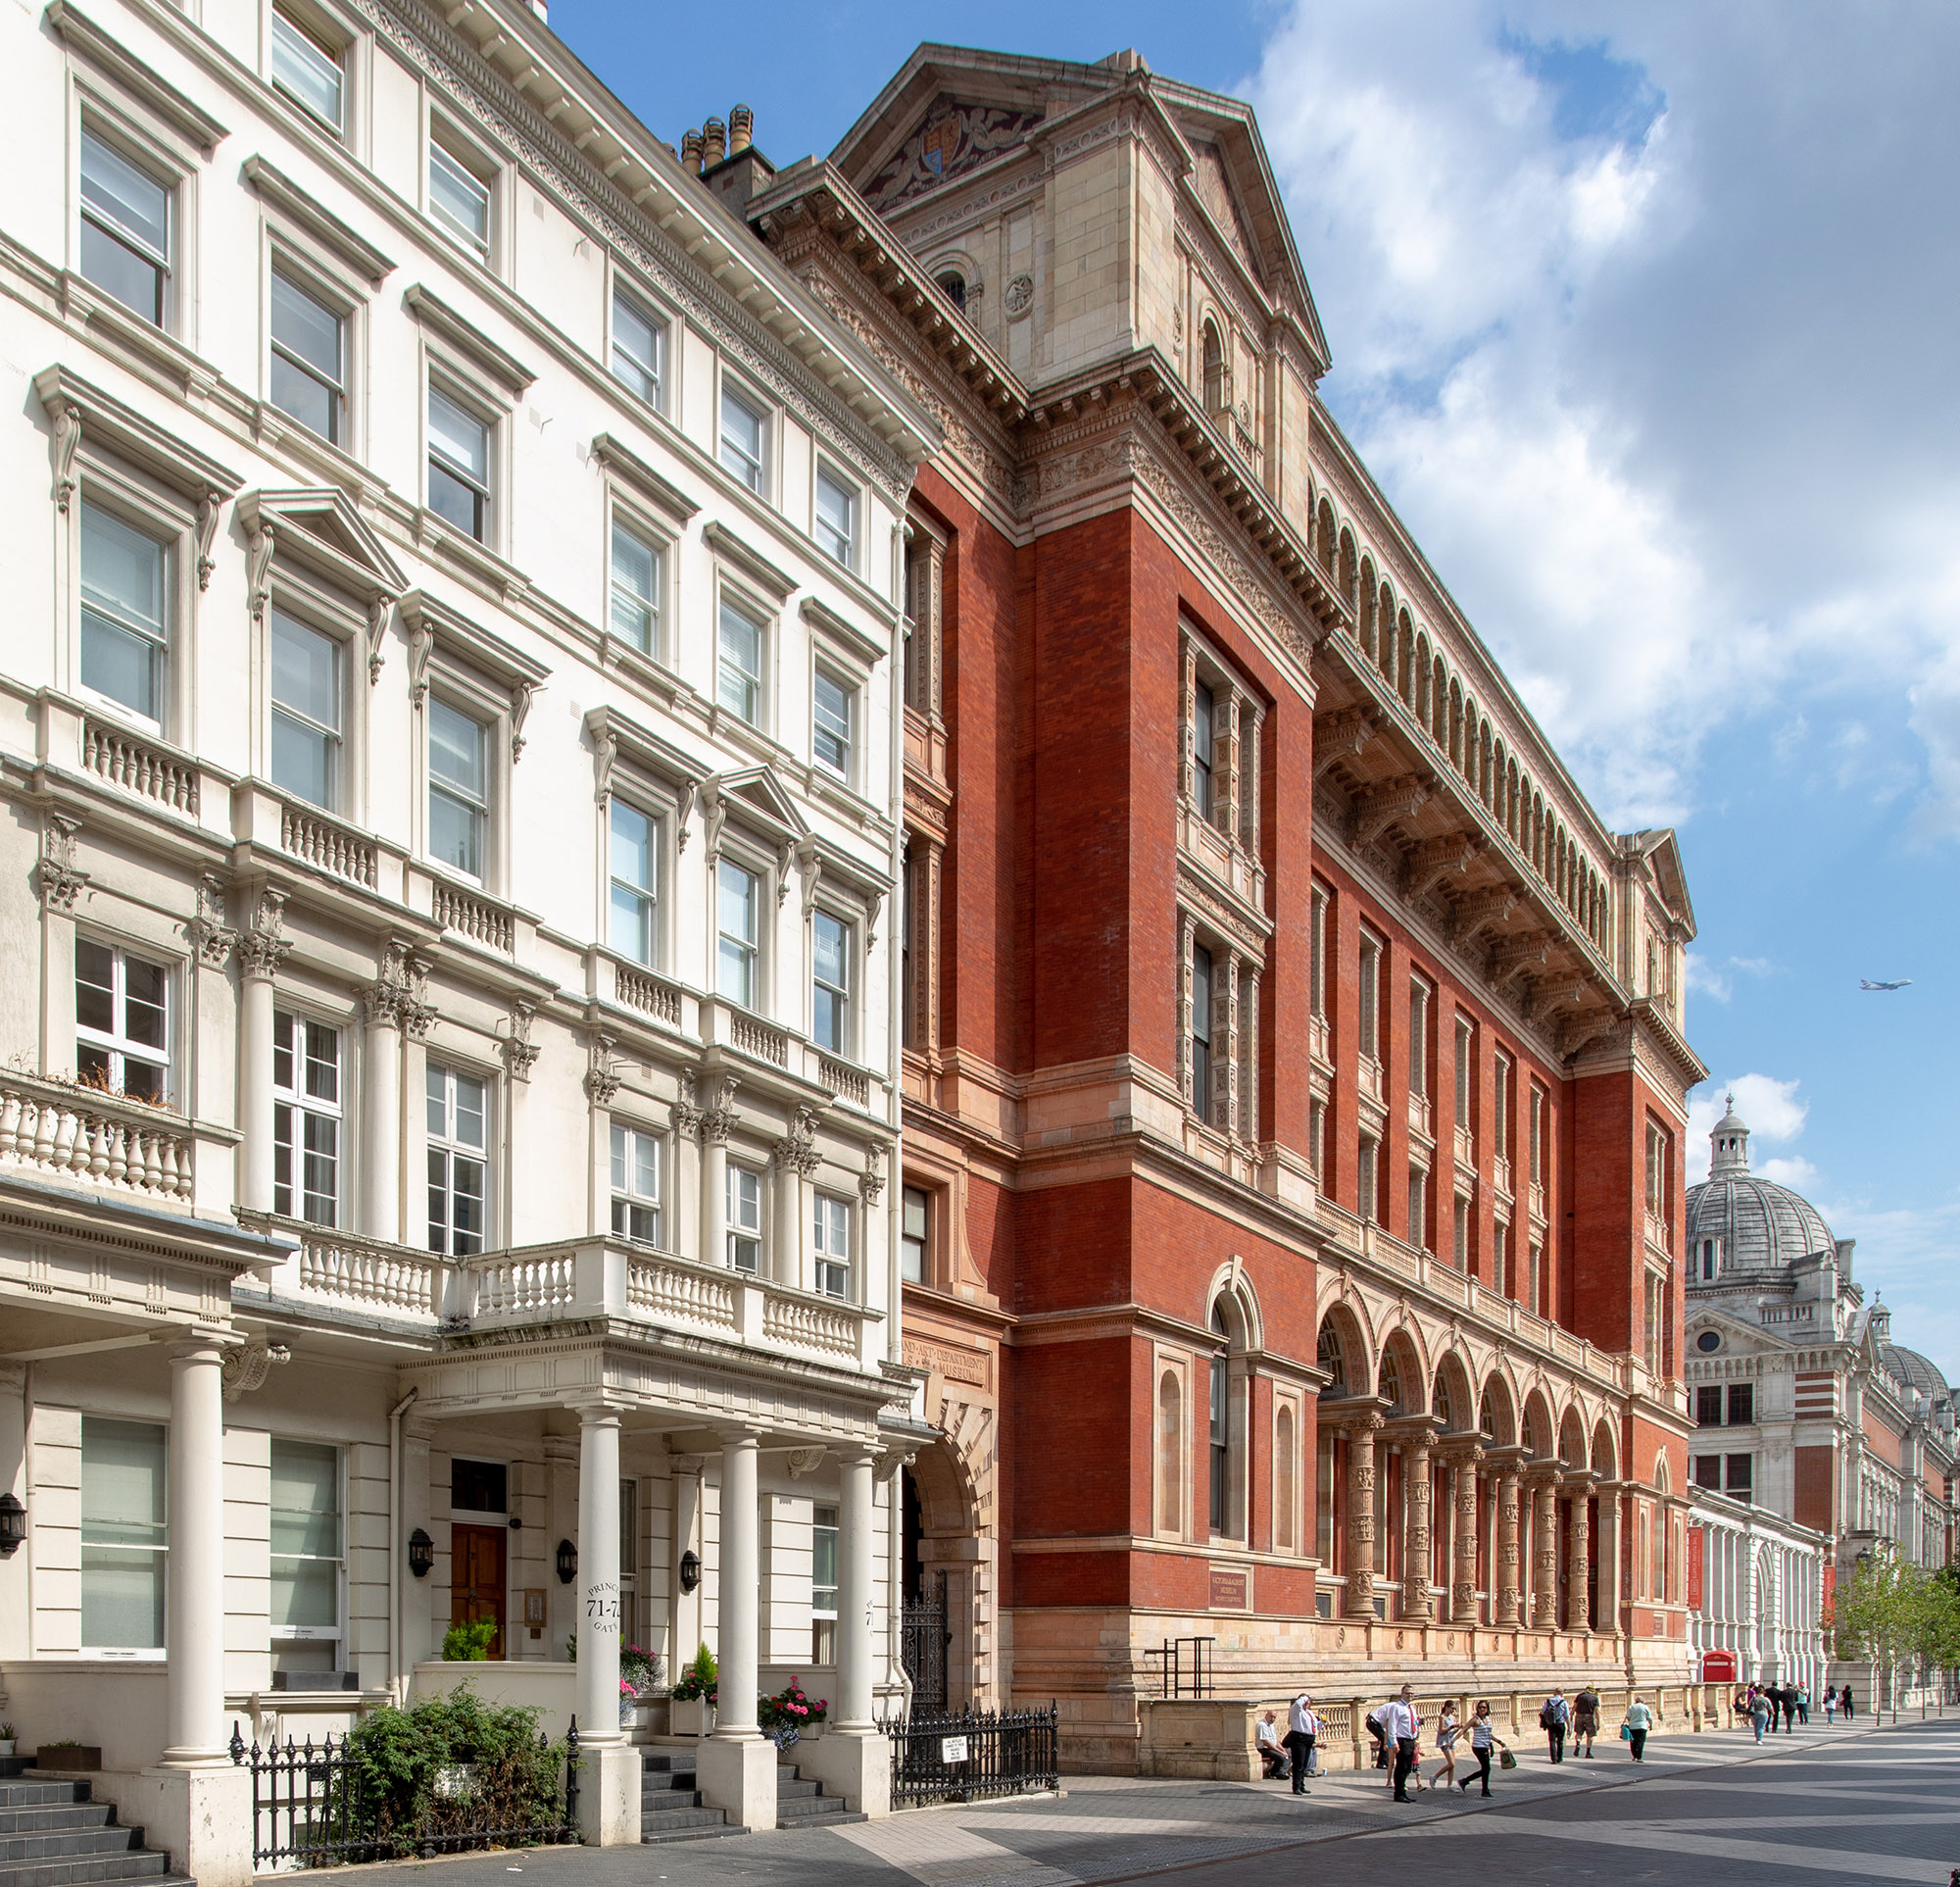 Luxury Kensington apartment raffled off for £10